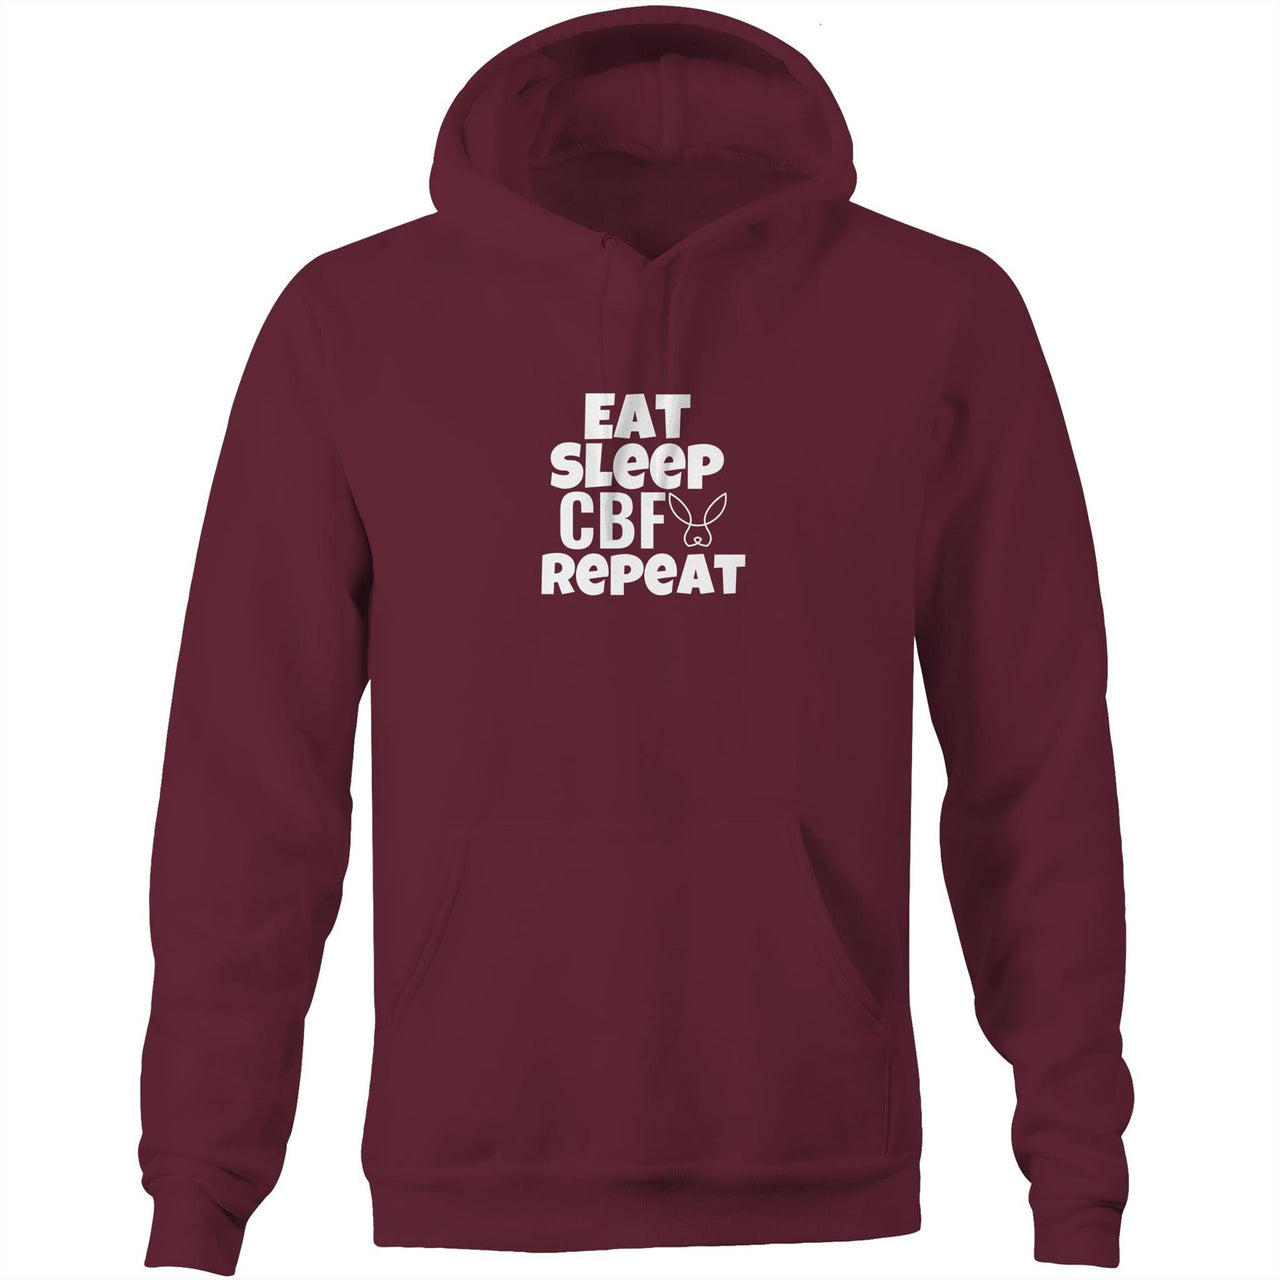 Eat Sleep CBF Repeat Pocket Hoodie Sweatshirt Burgundy by CBF Clothing